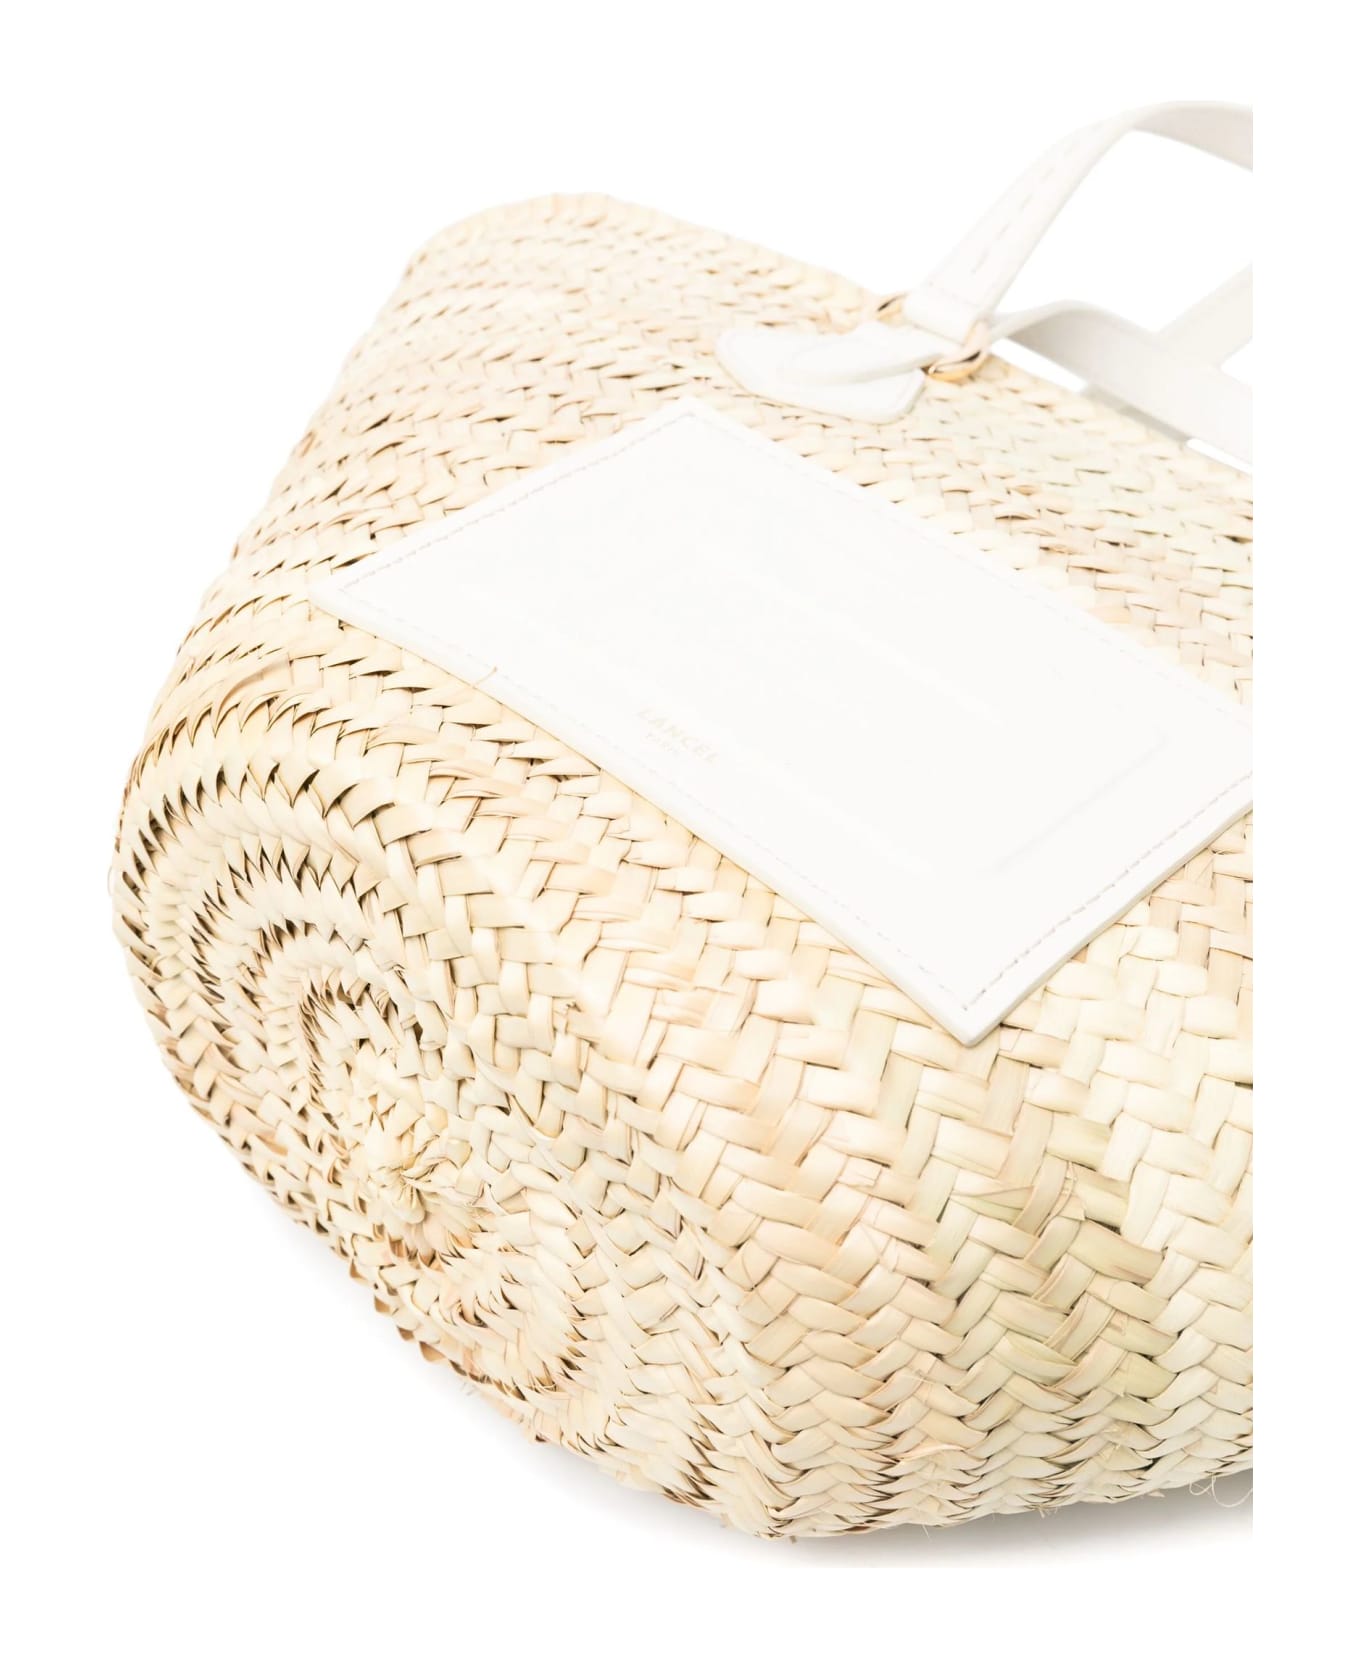 Lancel Light Beige And White Straw Beach Bag - Natural